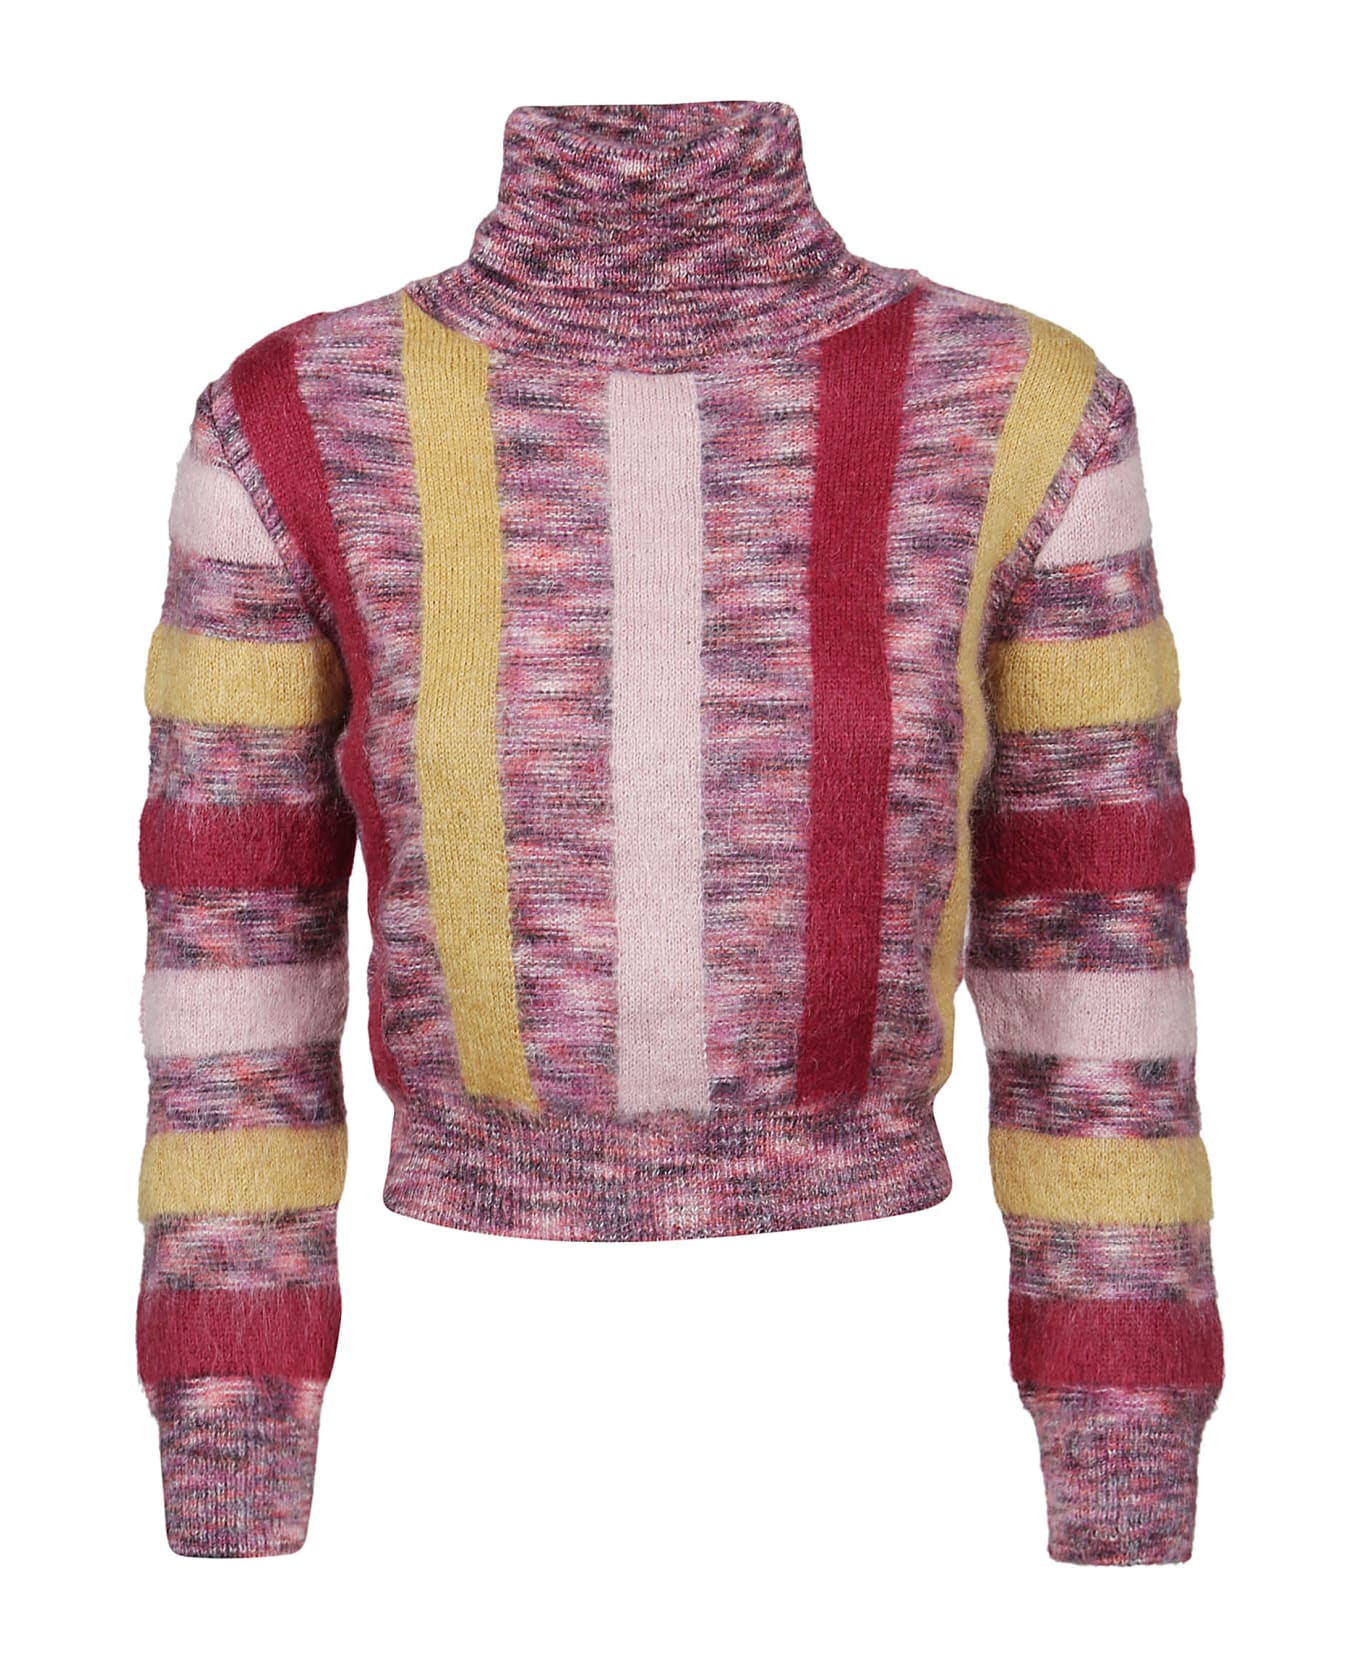 Dsquared2 Stripe Crop Turtleneck Sweater - Wine/sunflower/pink